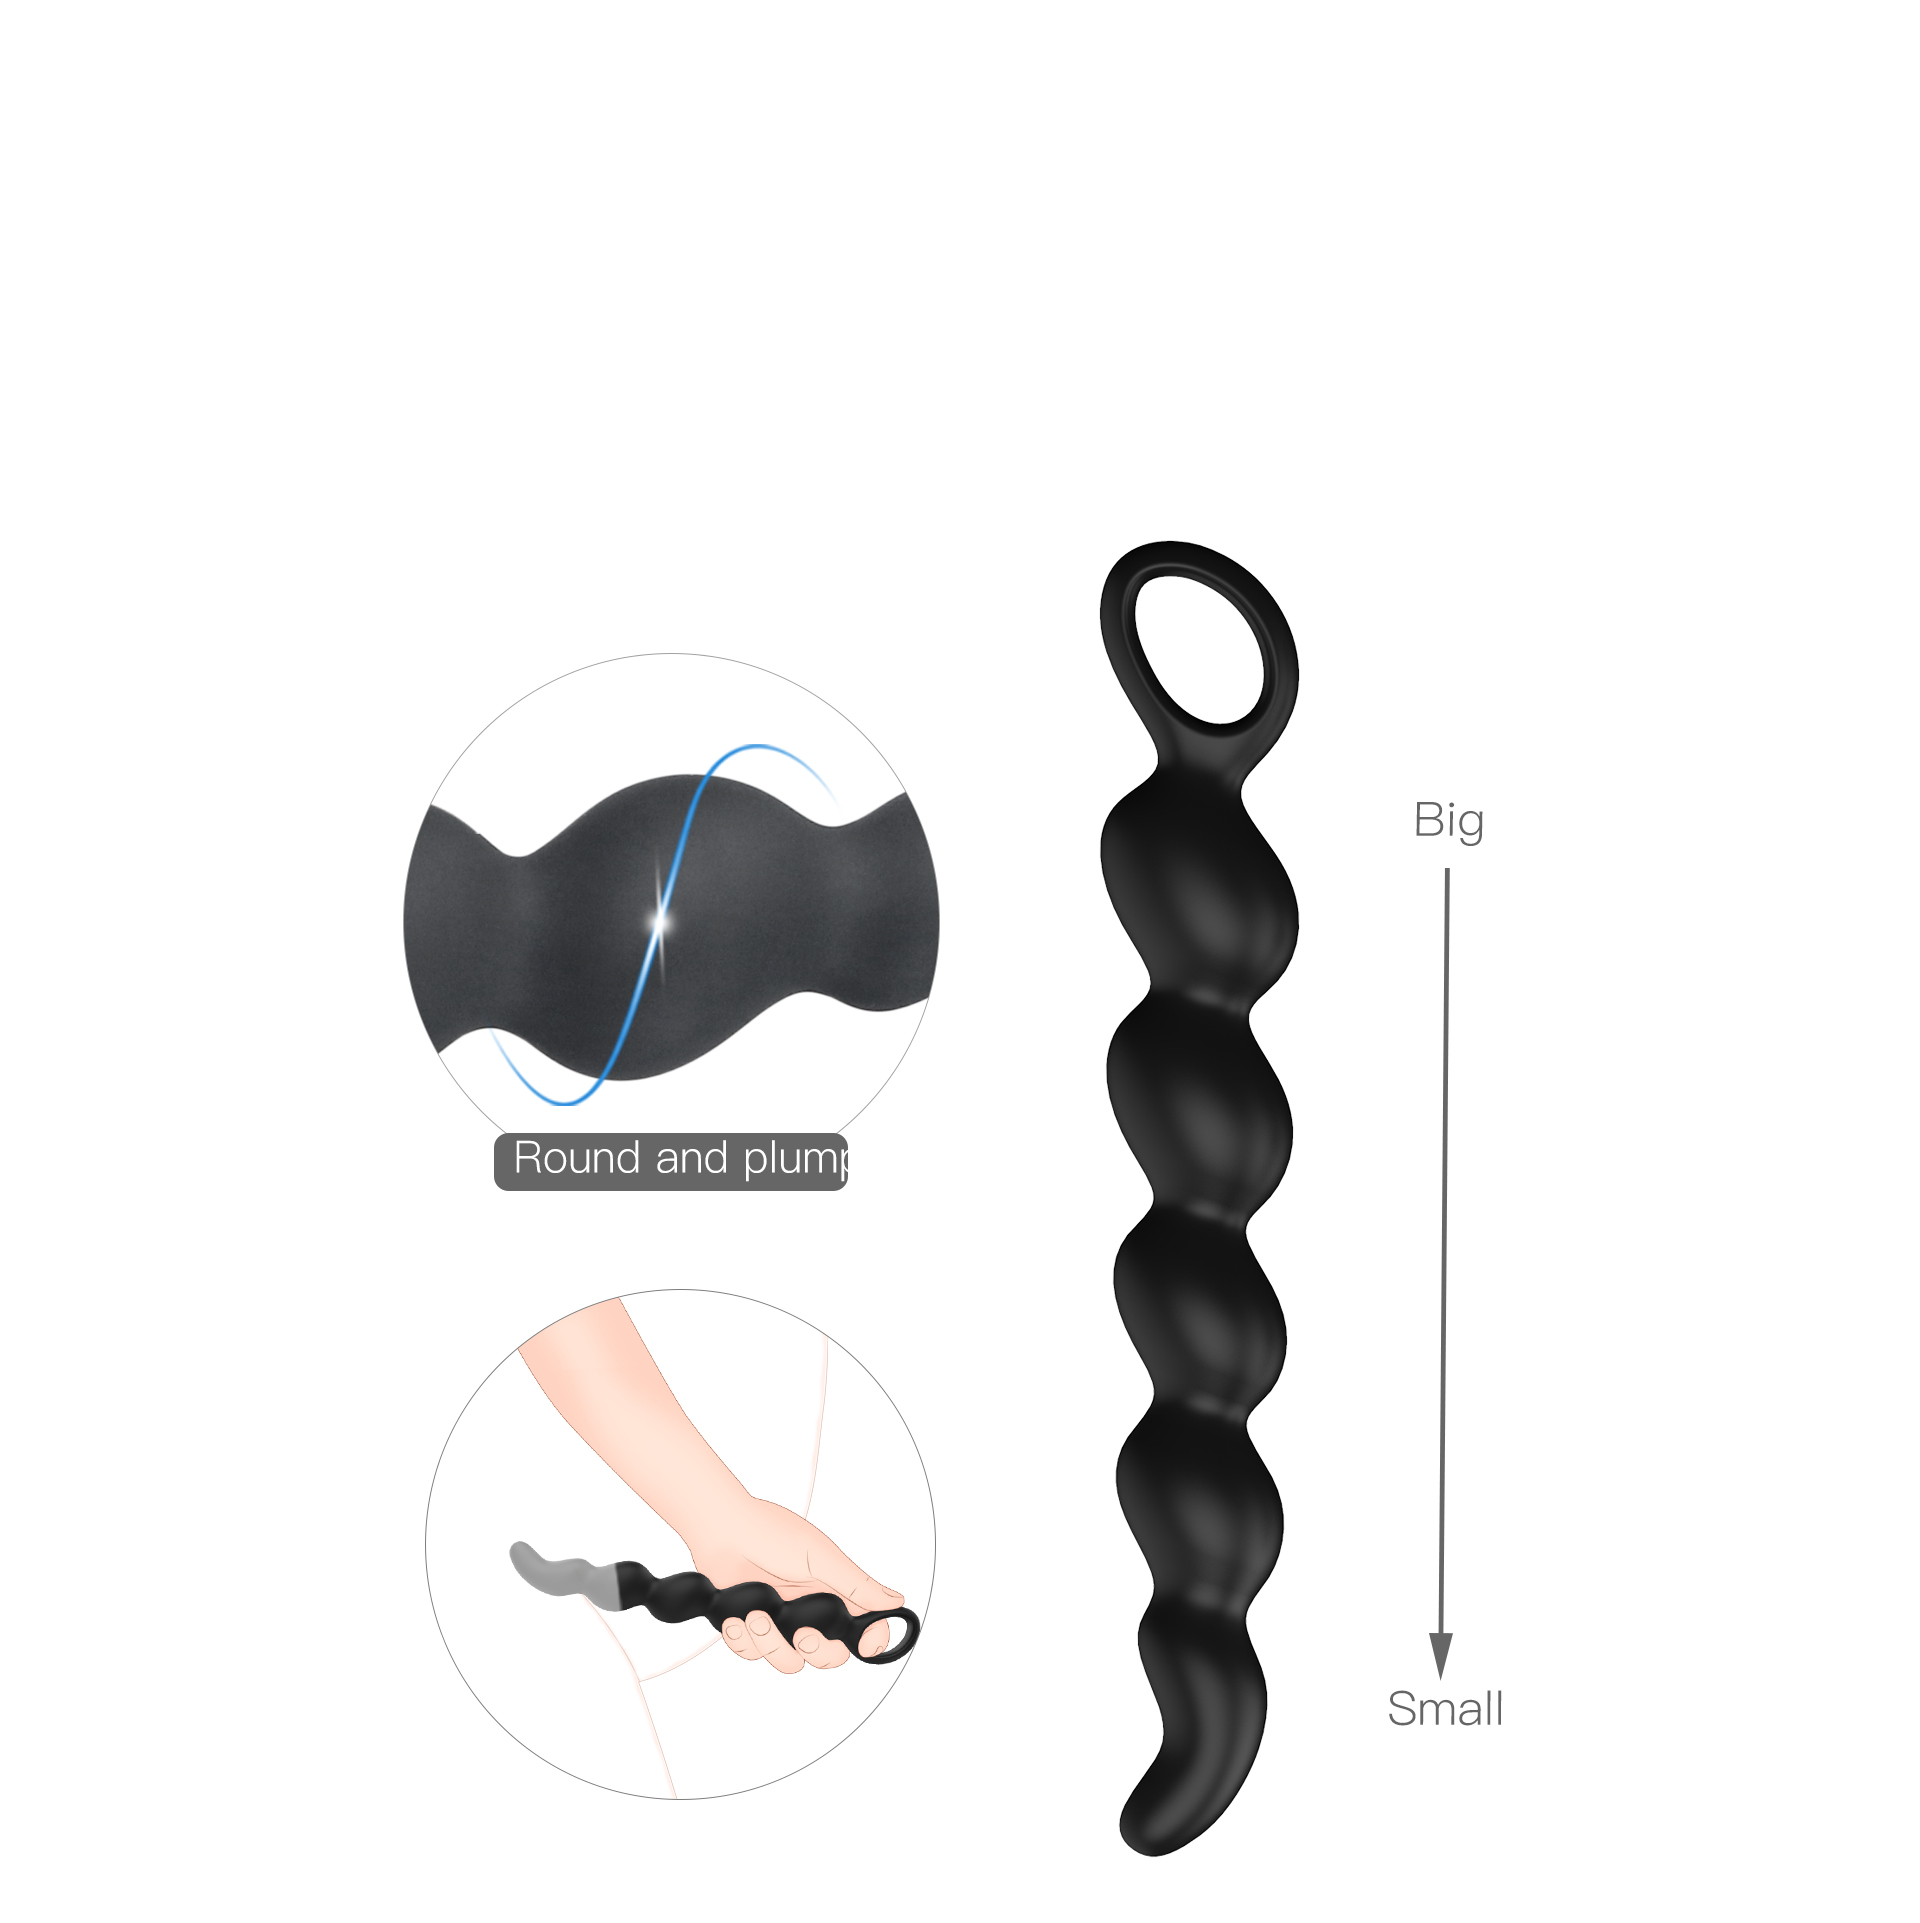 Ergonomic shape handheld ring based pleasure toys food grade silicone butt plug-05